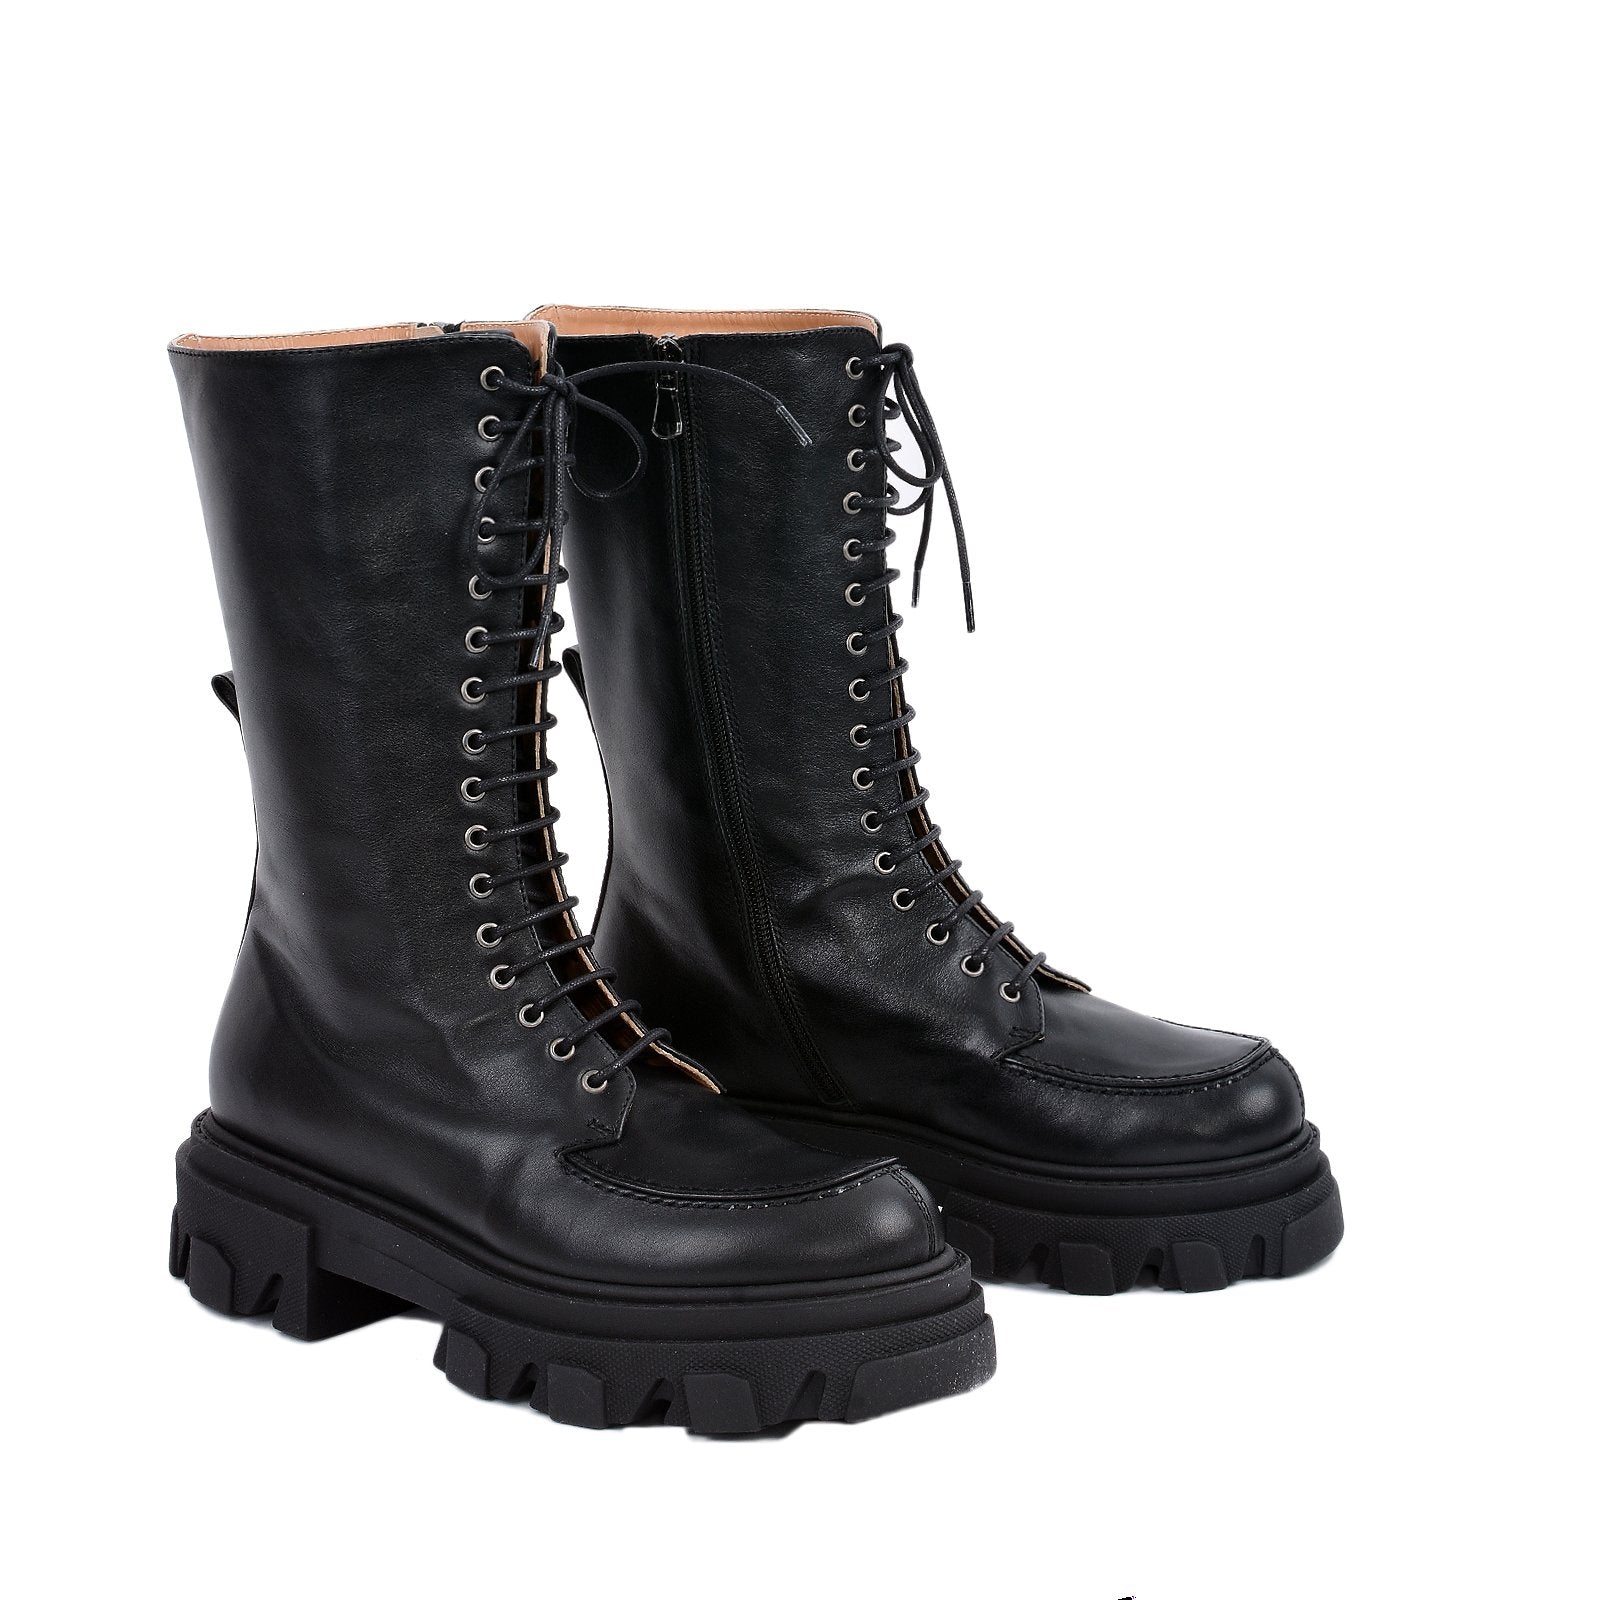 Ren Black High Combat Boots 2029VITELLO_NERO - 4